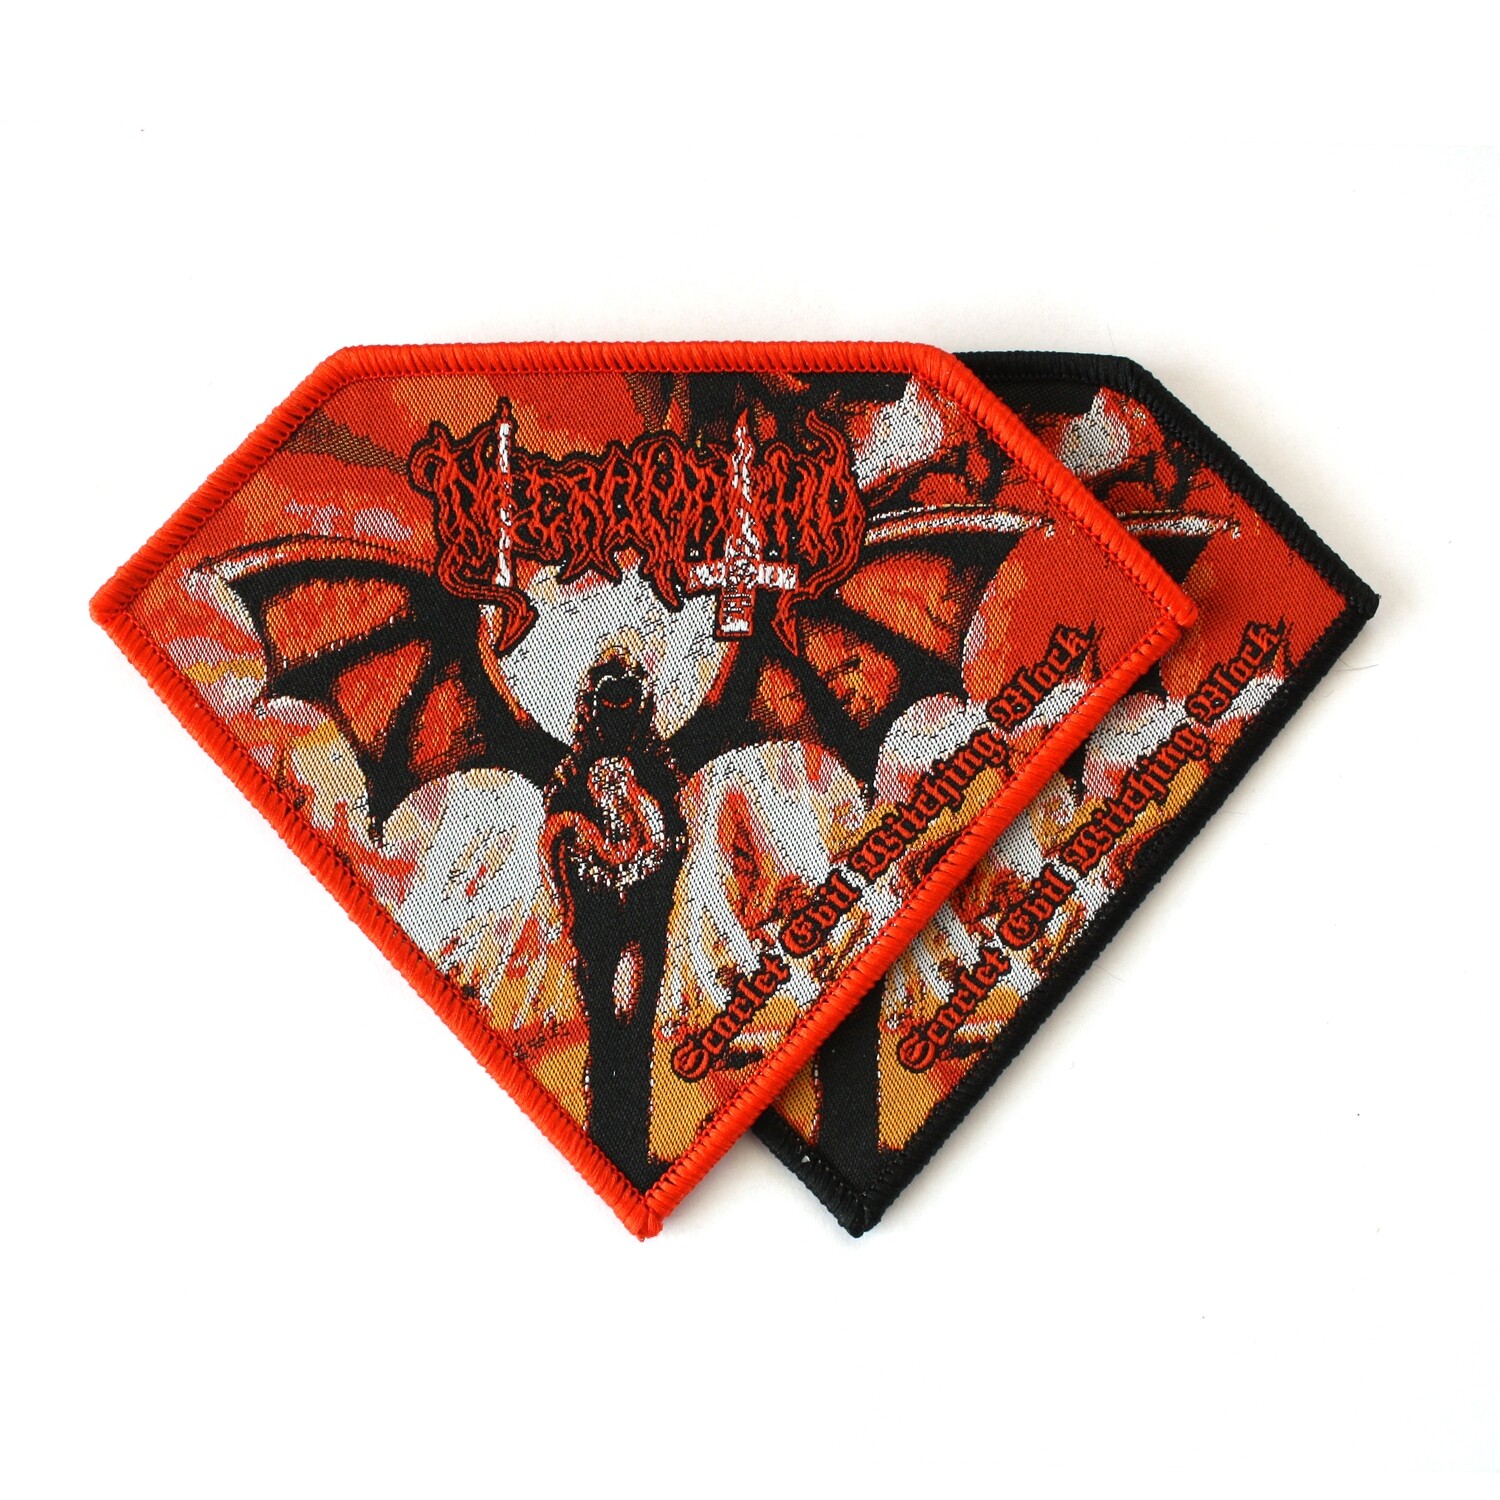 Necromantia - Scarlet Evil Witching Black